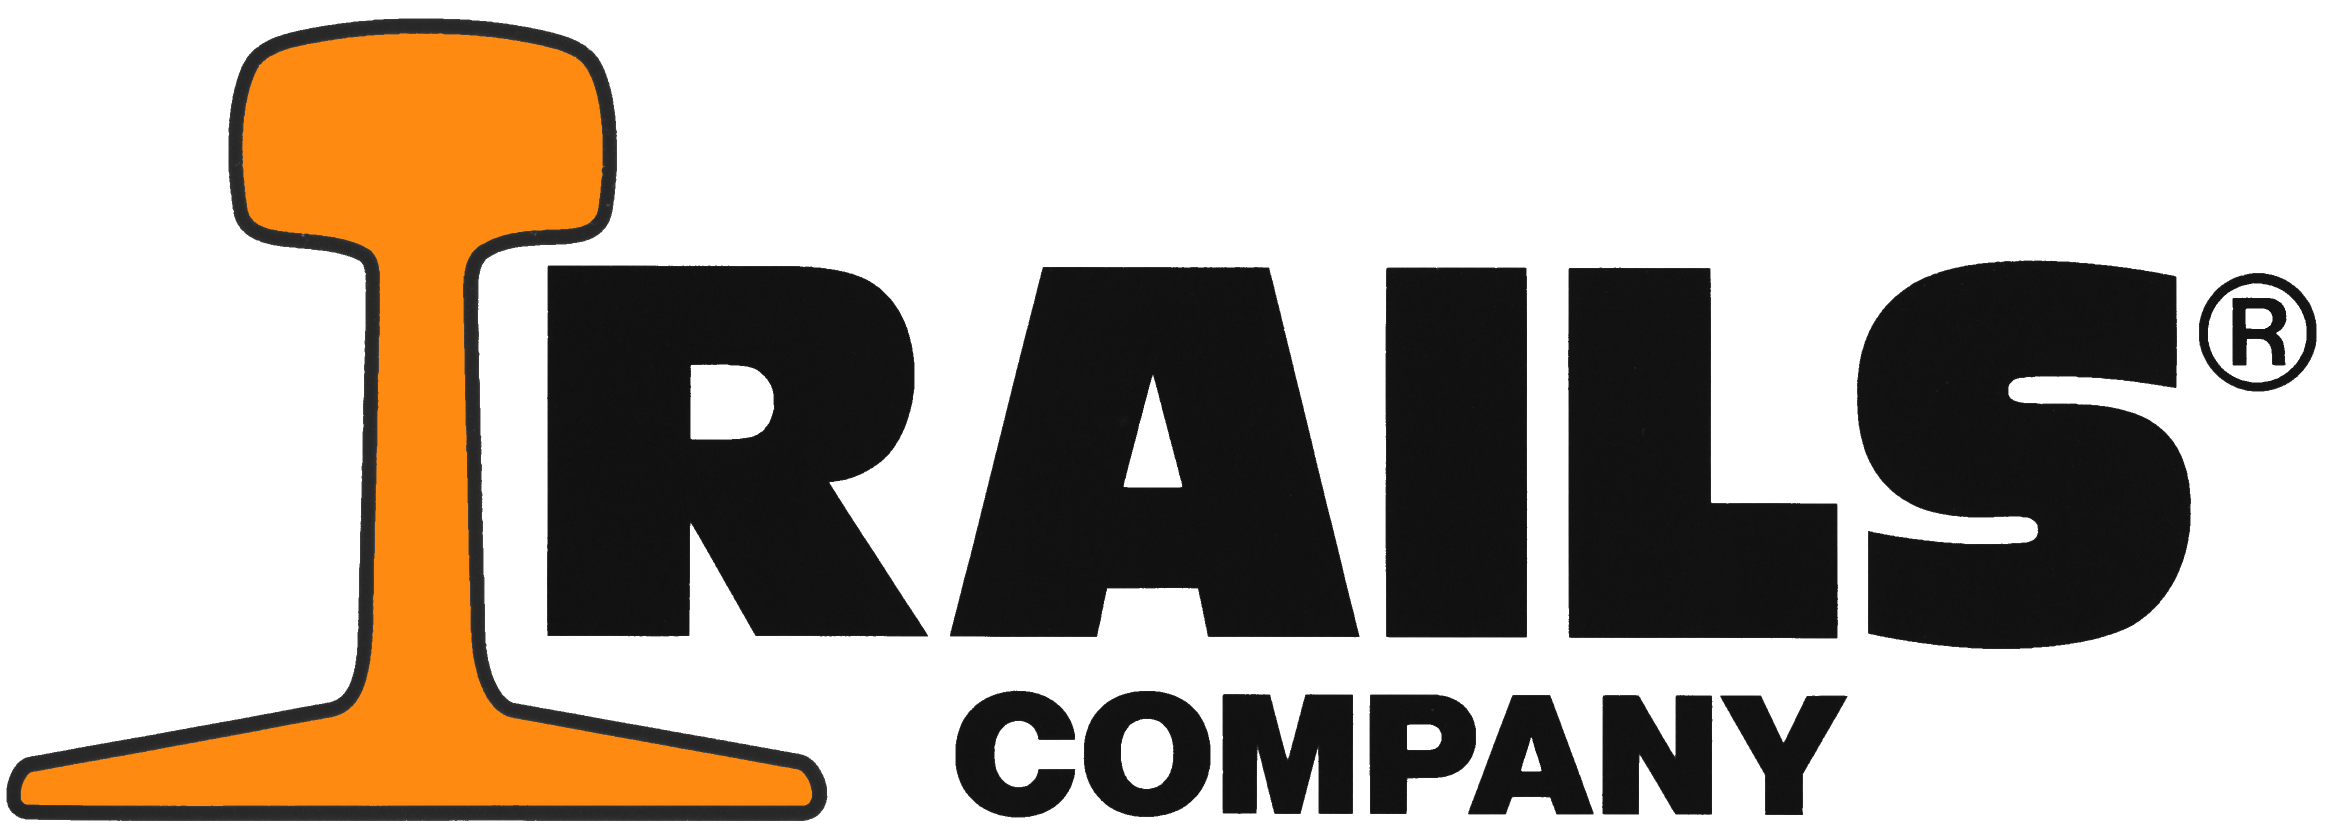 Railroad Company Logo - Rails Company Maintenance of Way and Signal Equipment Products